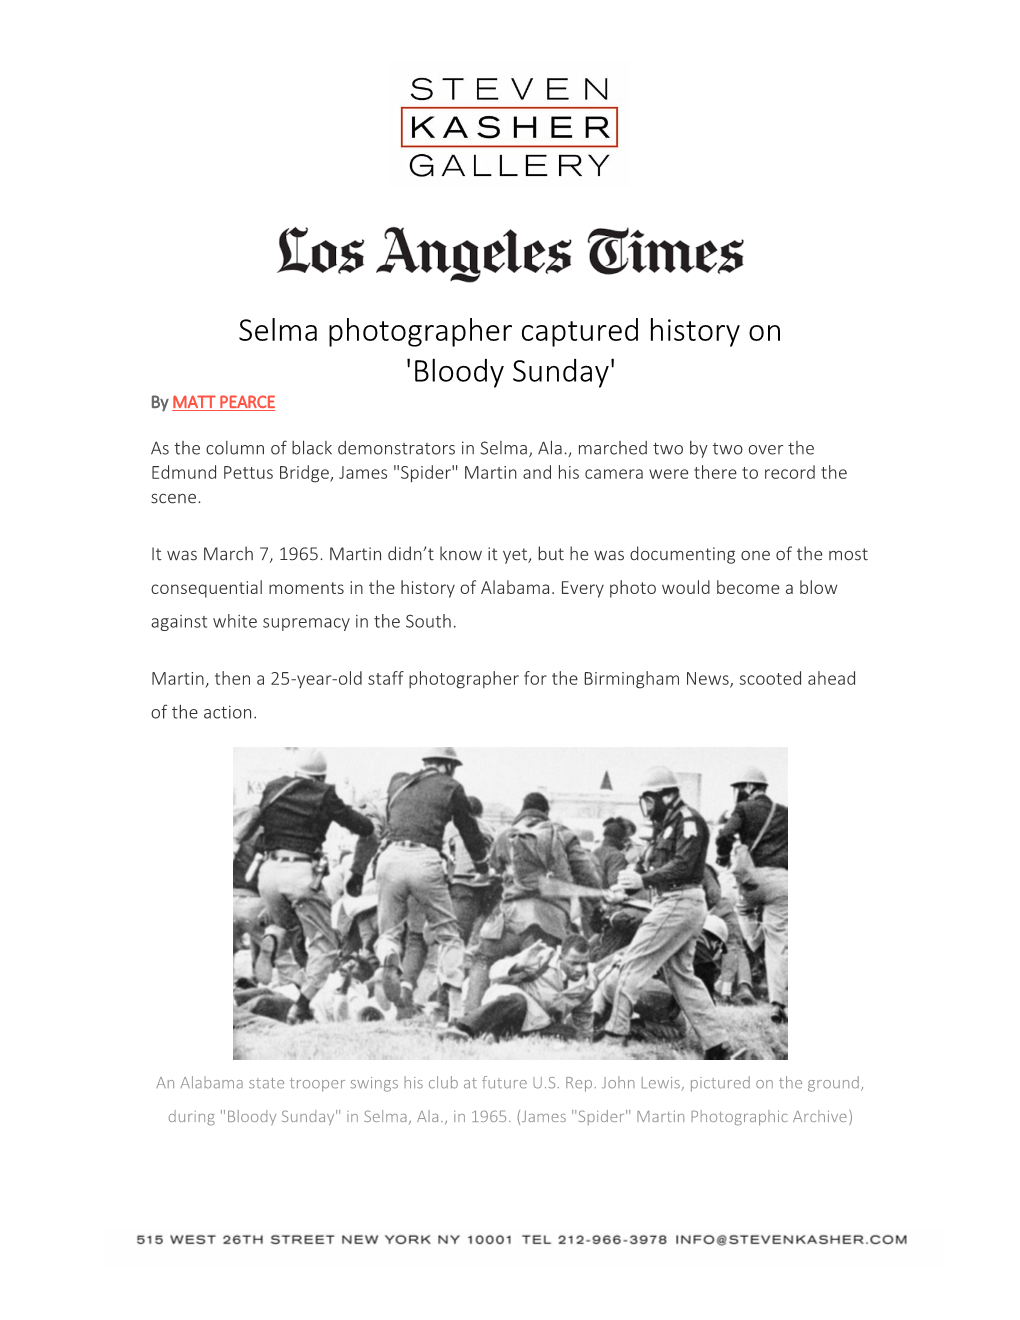 Selma Photographer Captured History on 'Bloody Sunday' by MATT PEARCE